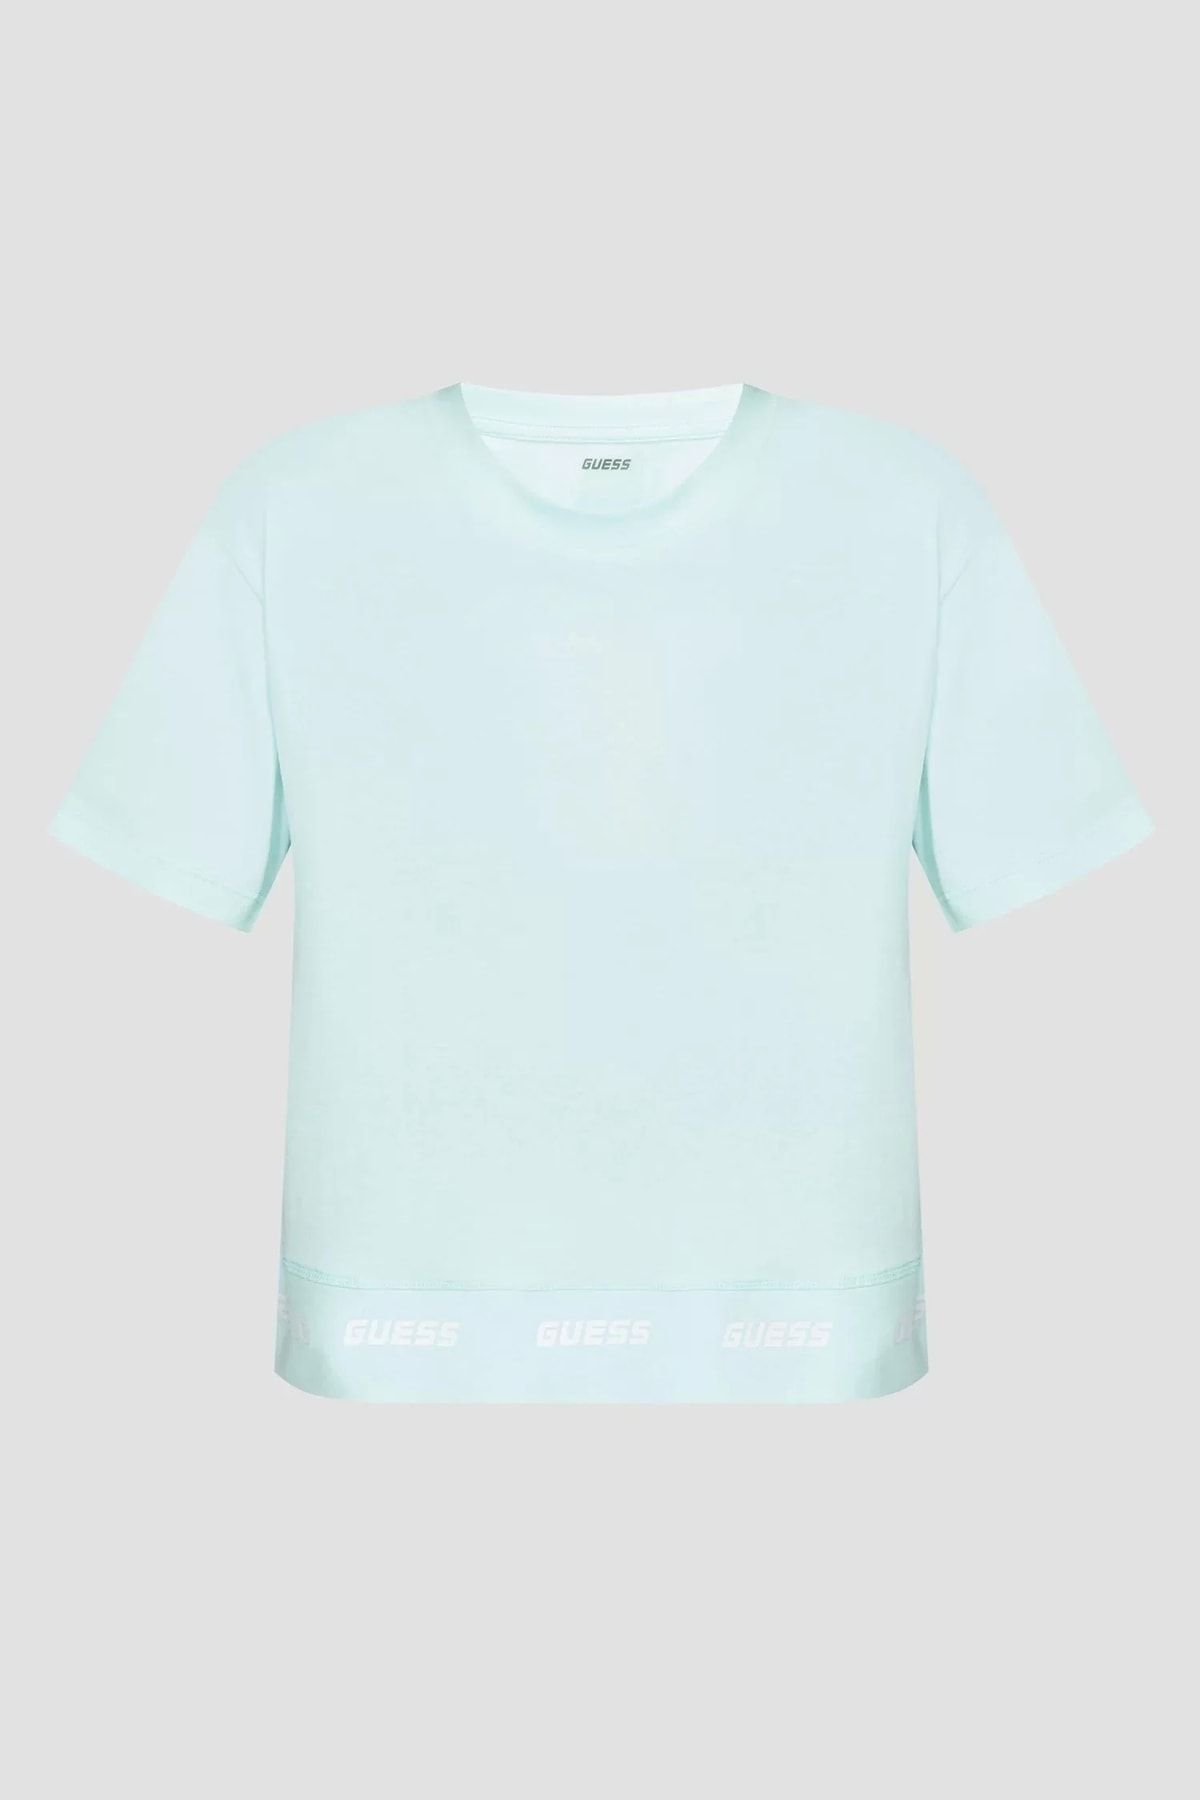 Guess تی شرت زنانه چاپ شده با لوگوی Mint Color Guess